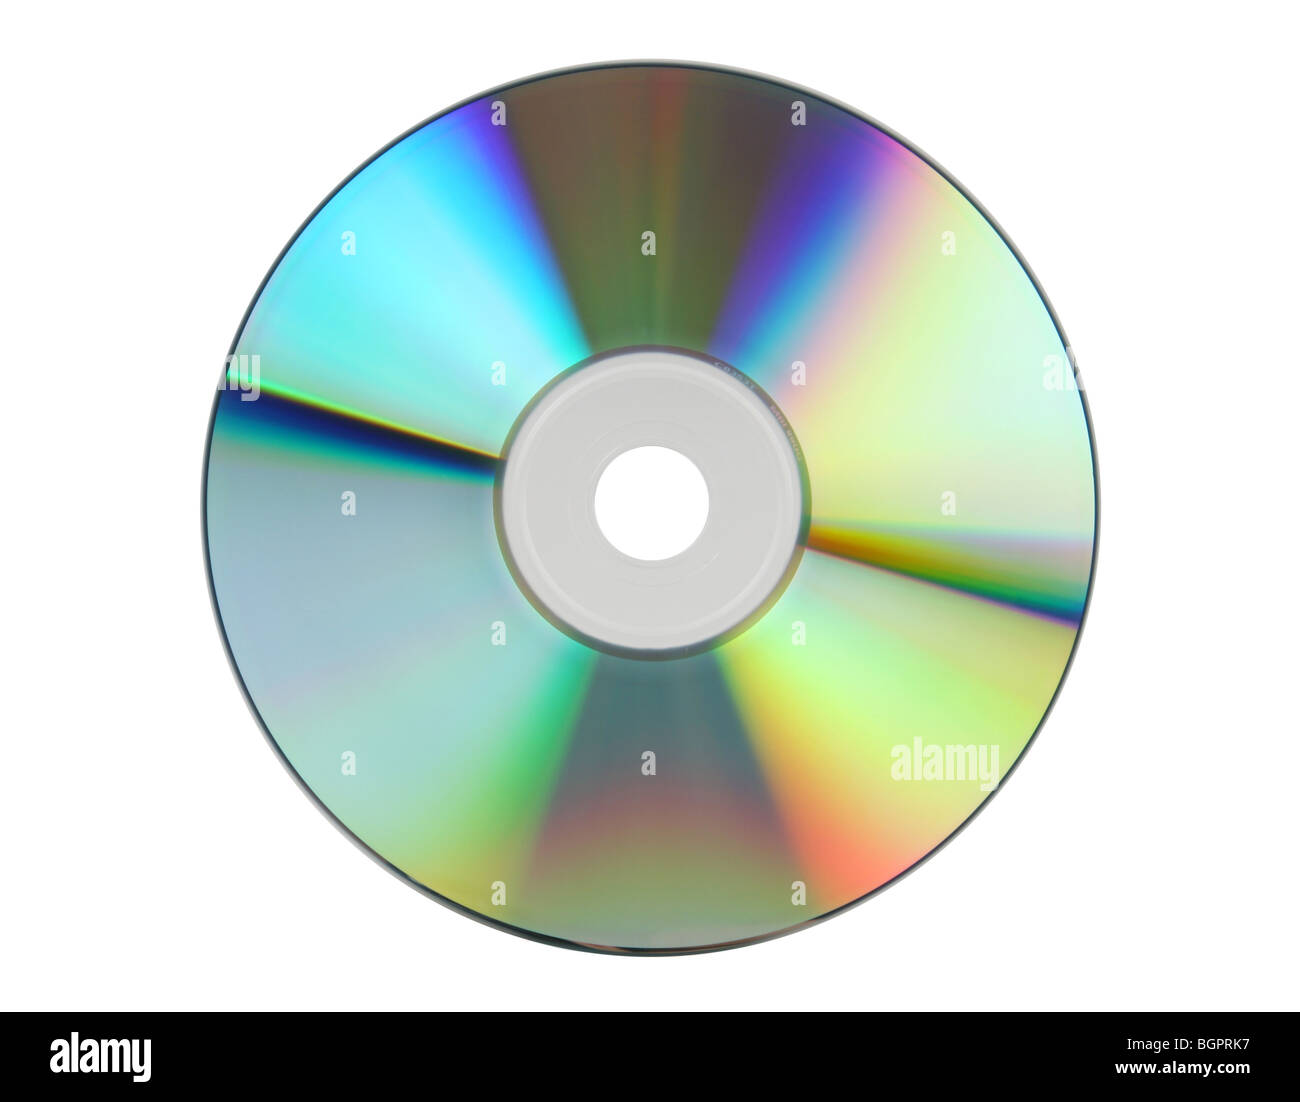 Un disco compacto / CD / DVD / bluray. Con el clásico patrón de / espectro arco iris. Almacenamiento de estándar moderno Fotografía de stock - Alamy